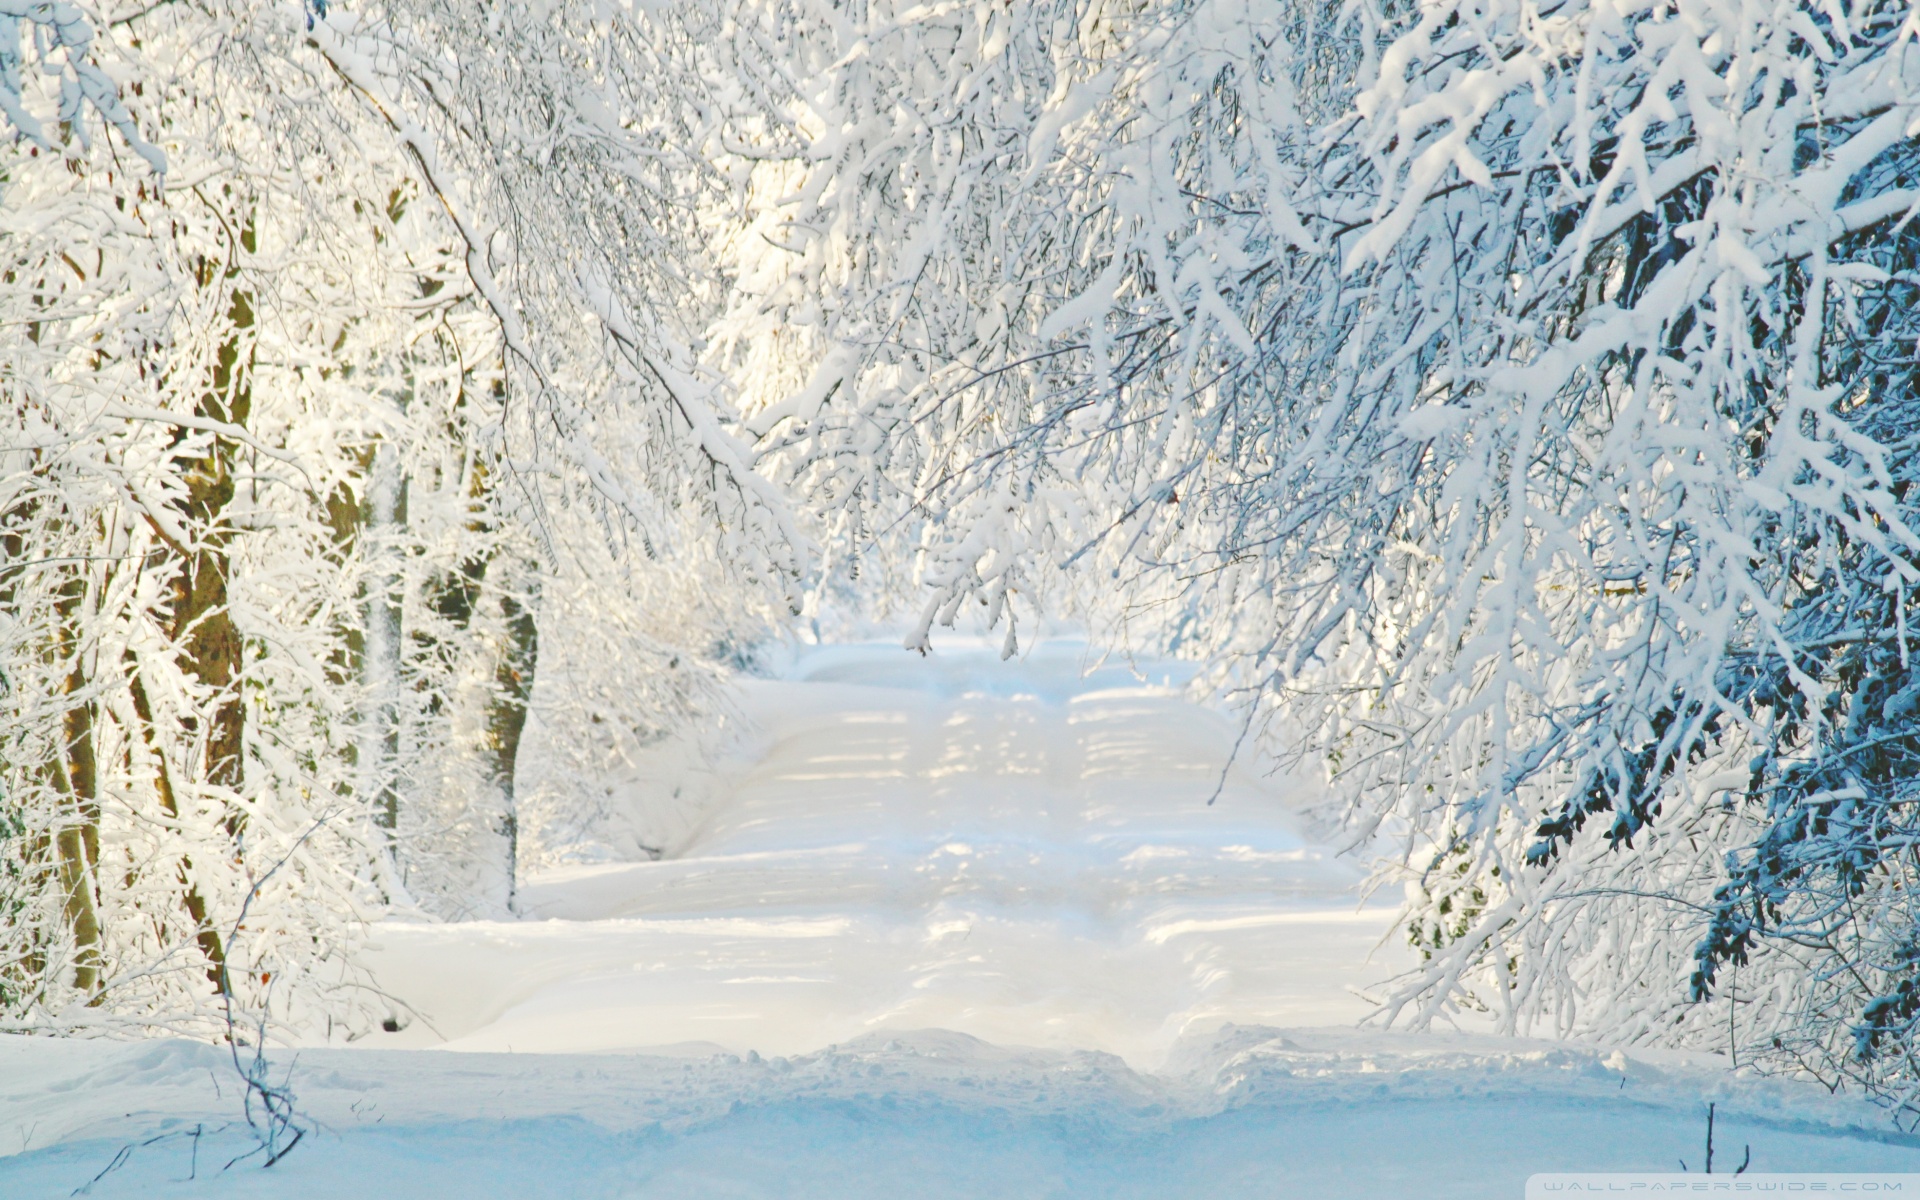 Красивая картинка со снегом. Снежный пейзаж. Зимняя природа. Зима снег. Зимний фон.